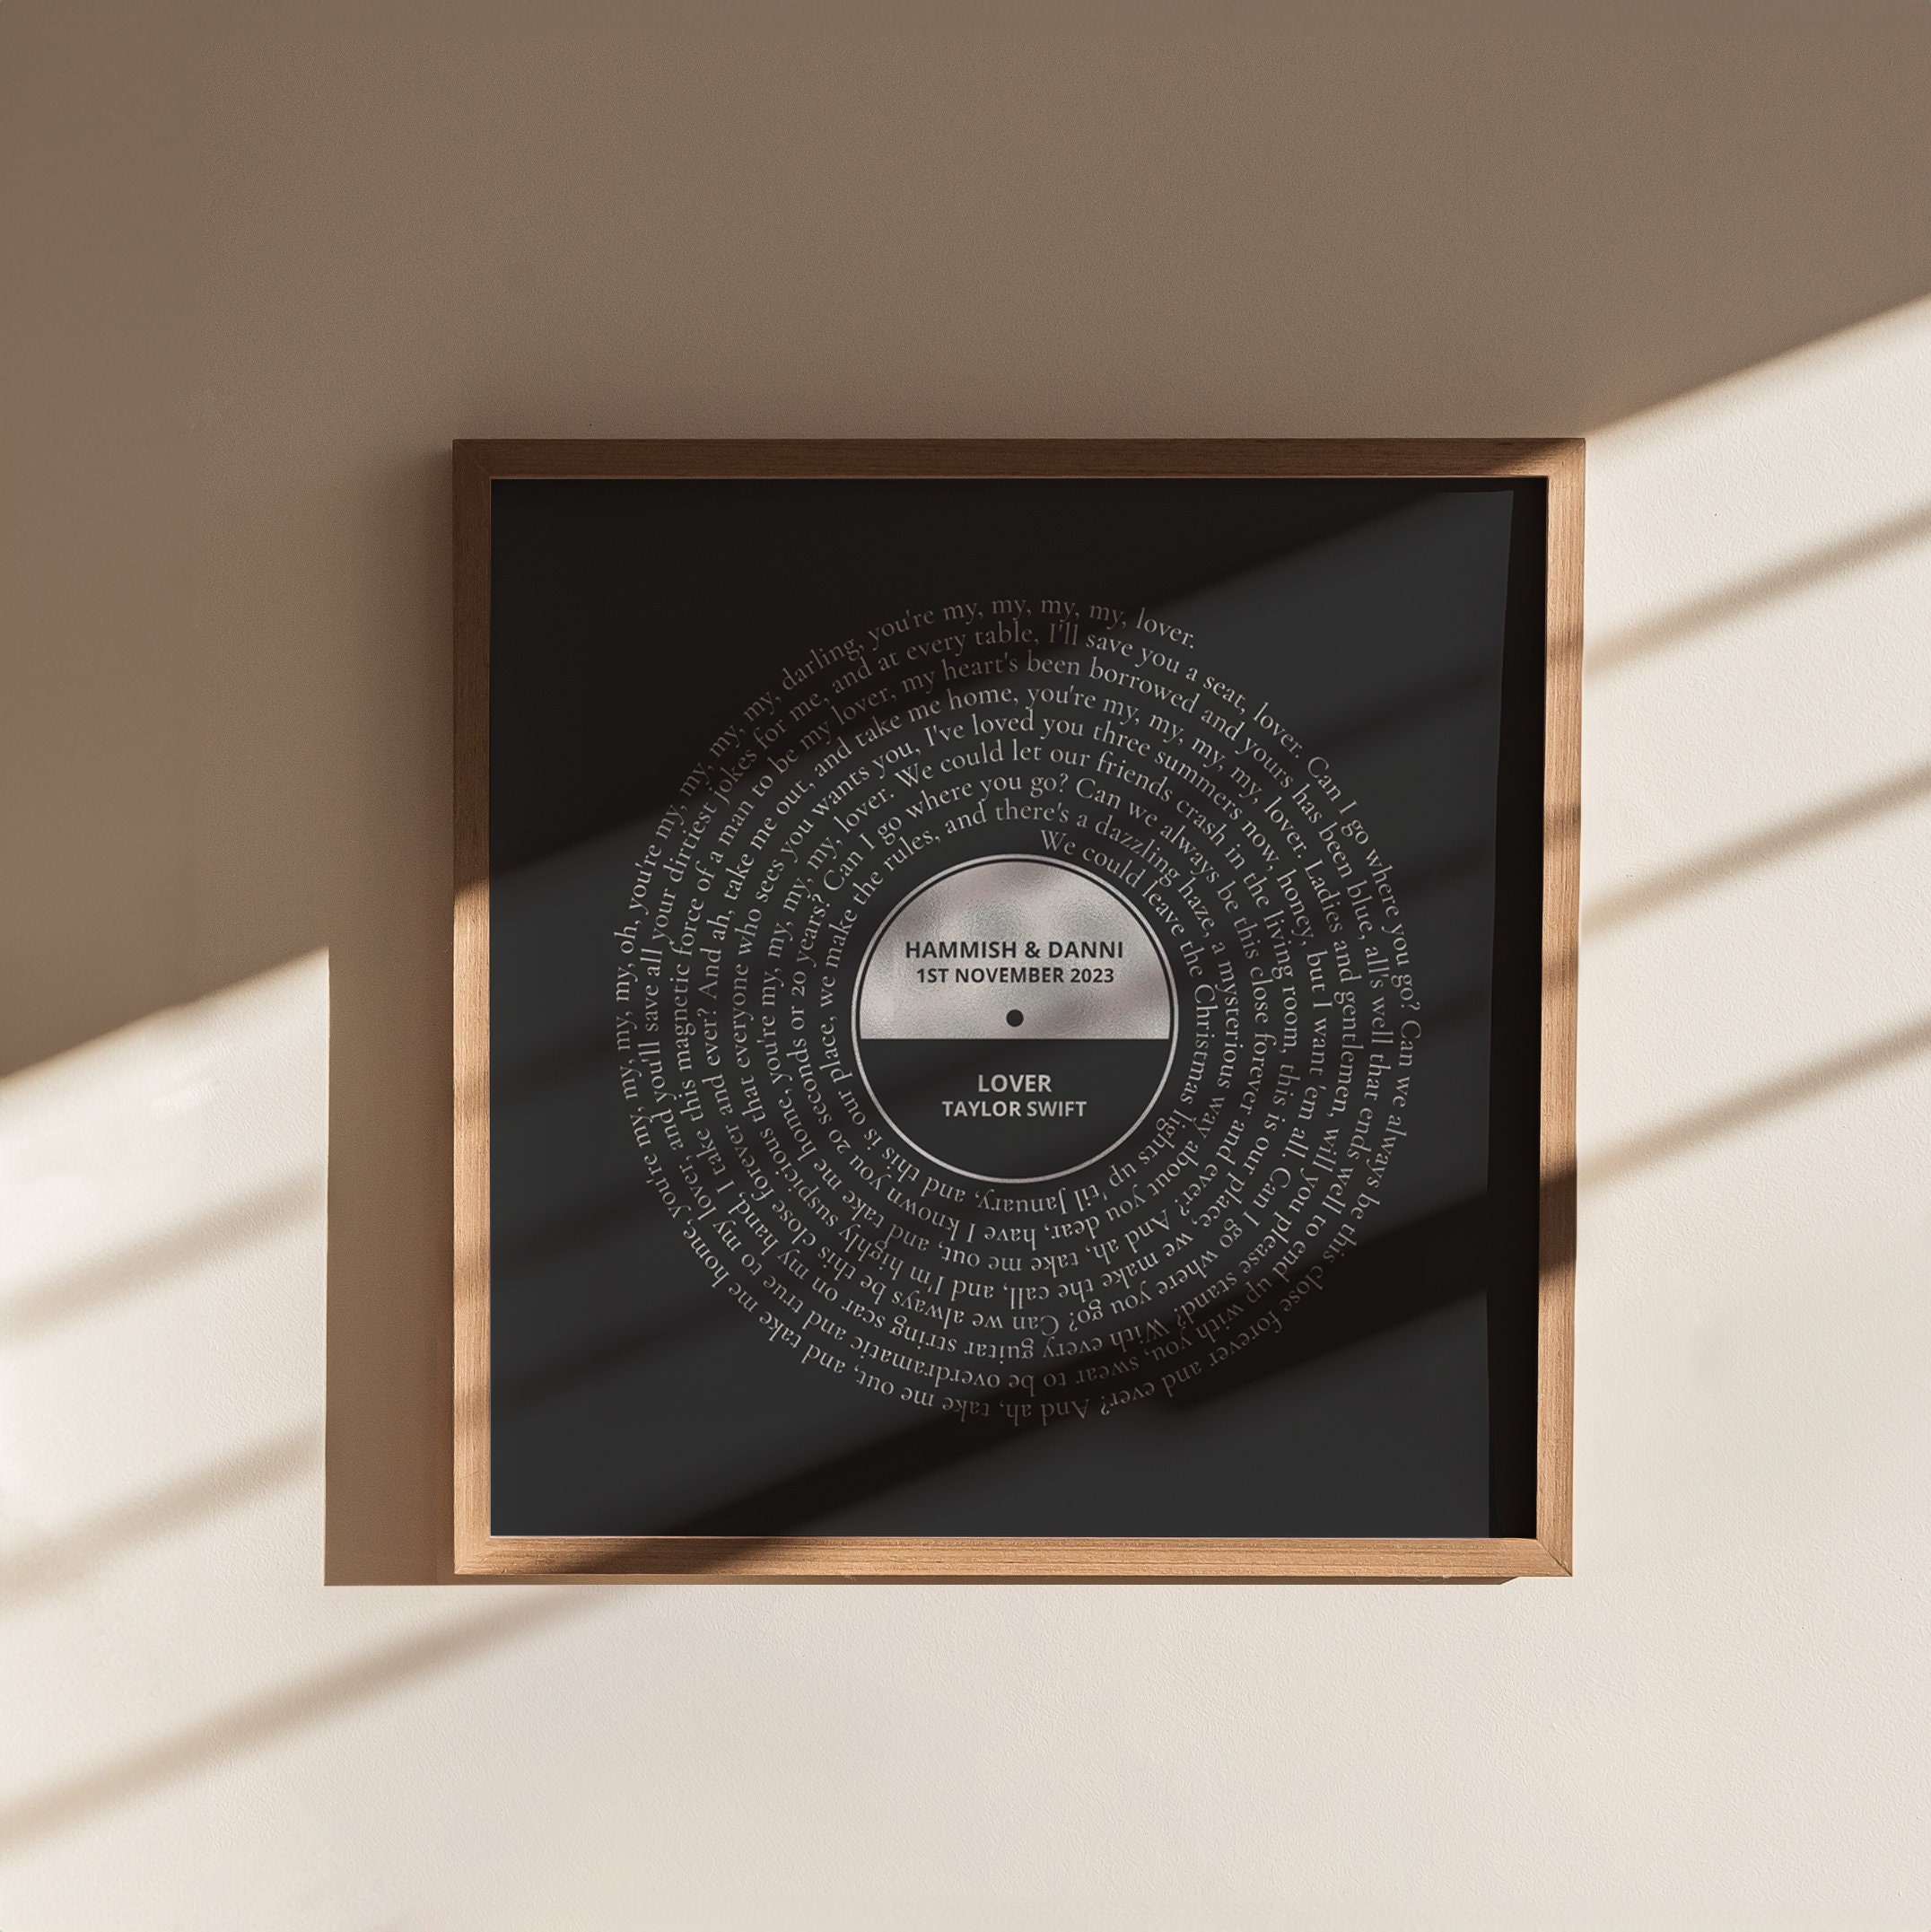 SOJA True Love Vinyl Record Song Lyric Print - Song Lyric Designs